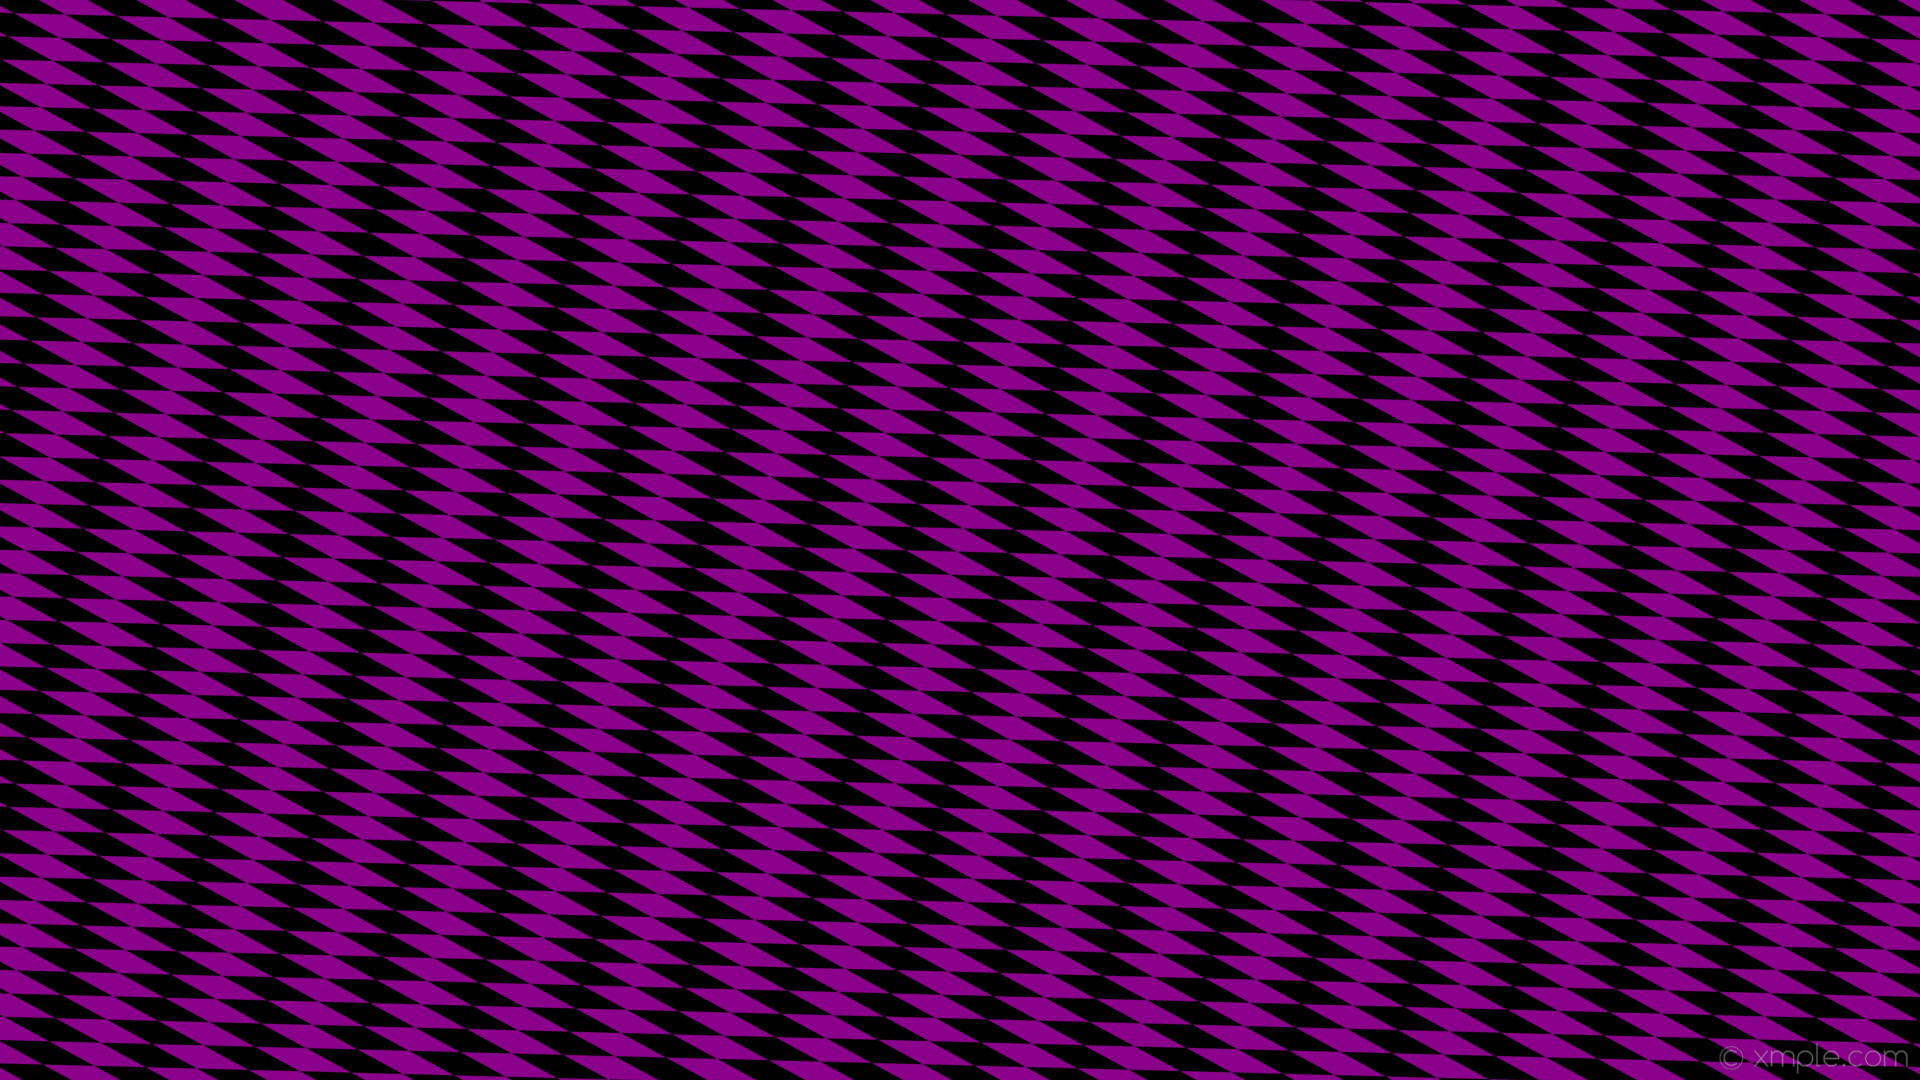 1920x1080 wallpaper purple diamond rhombus black lozenge dark magenta #8b008b #000000  165Â° 100px 24px